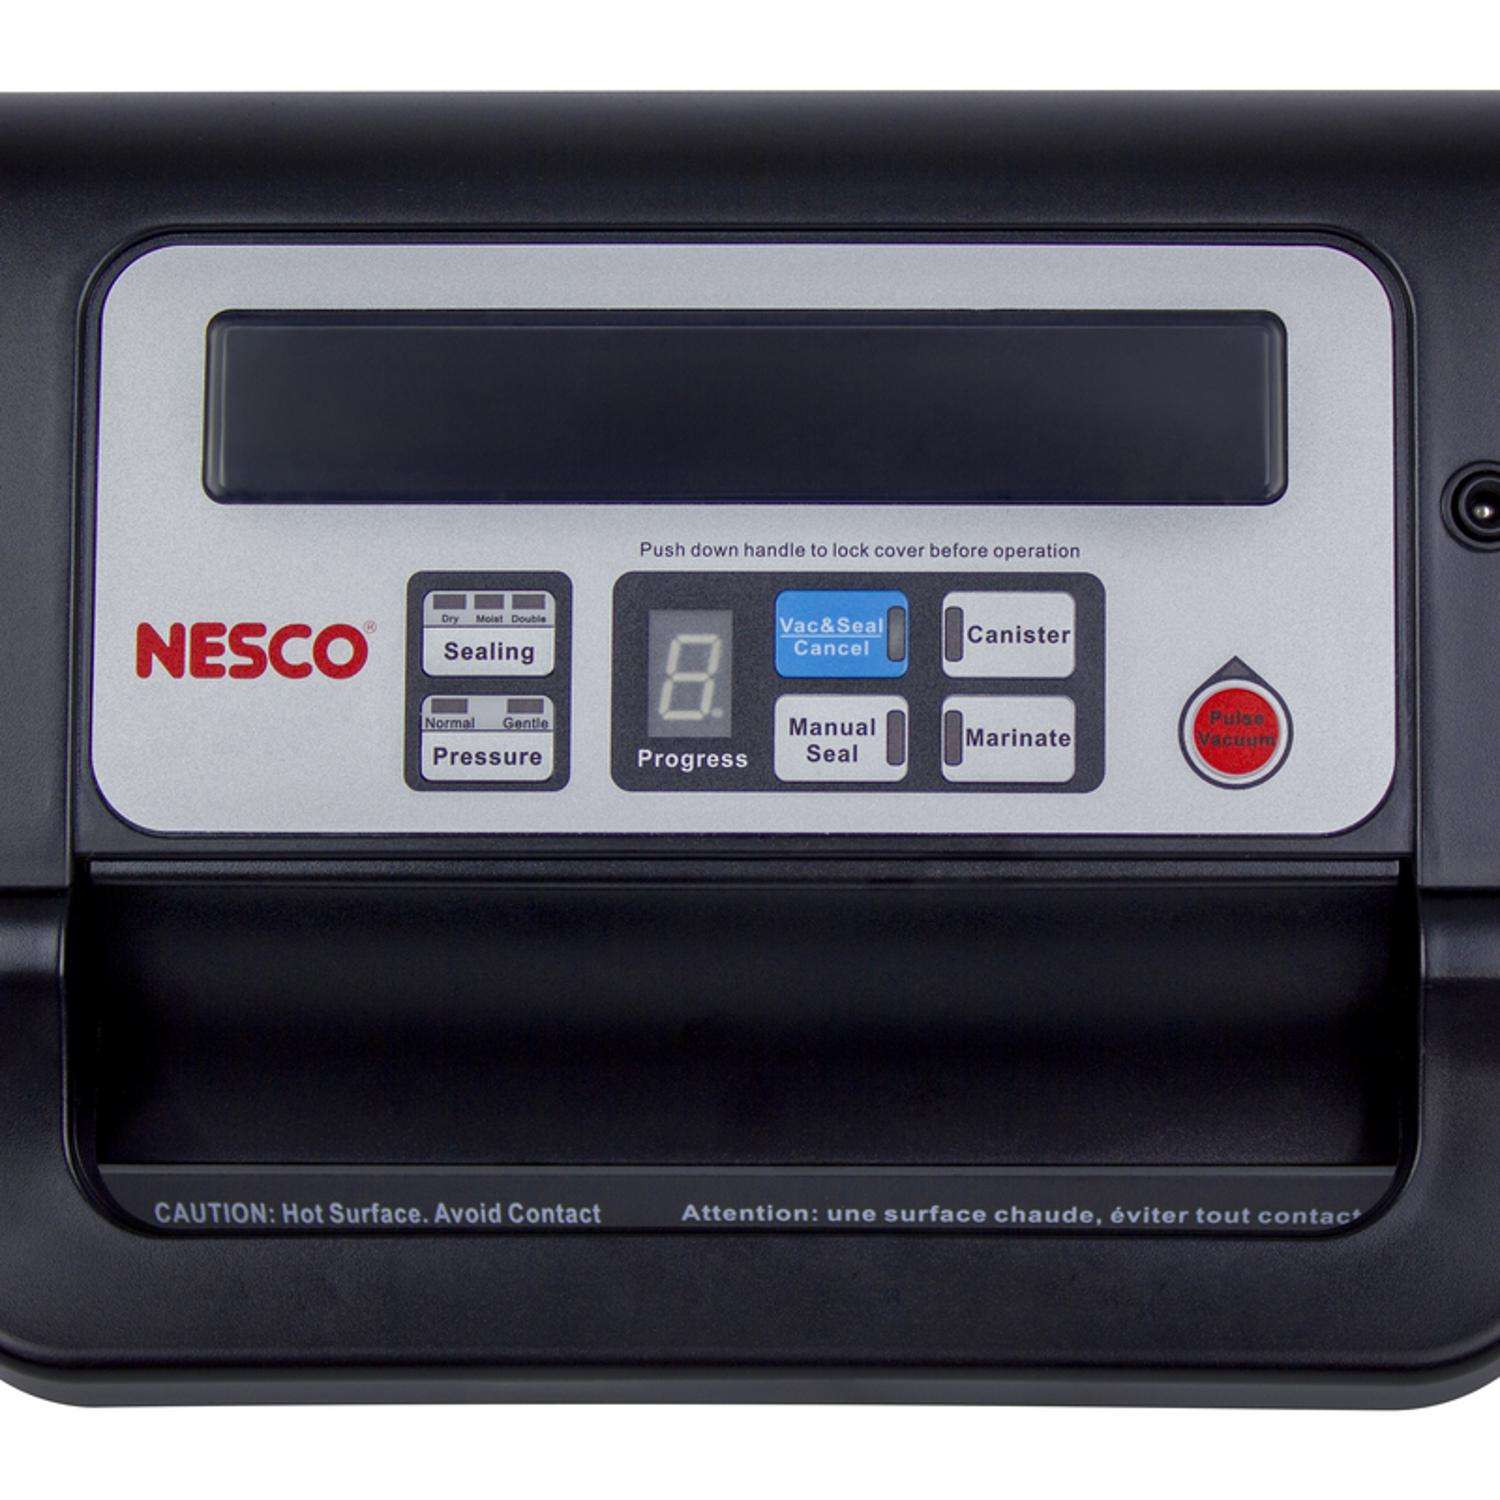 Nesco VS-12 Deluxe Review: Watch Before You Buy! 